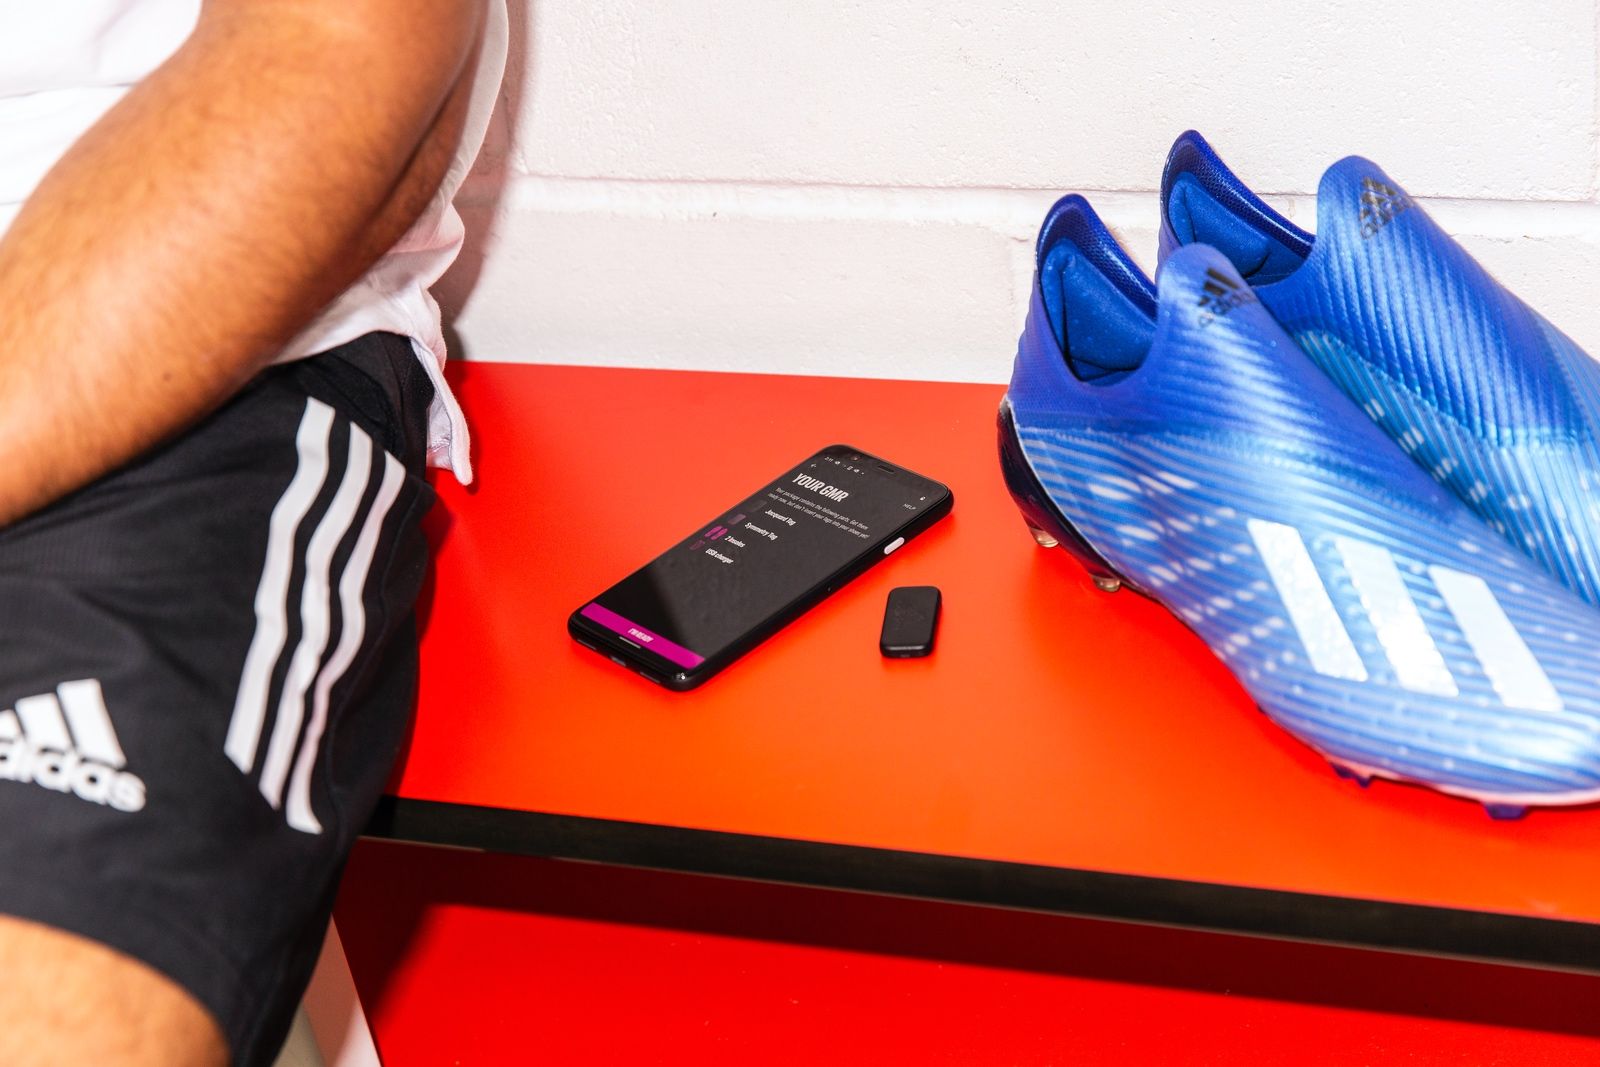 Adidas GMR is a Google Jacquard smart insole - Pocket-lint